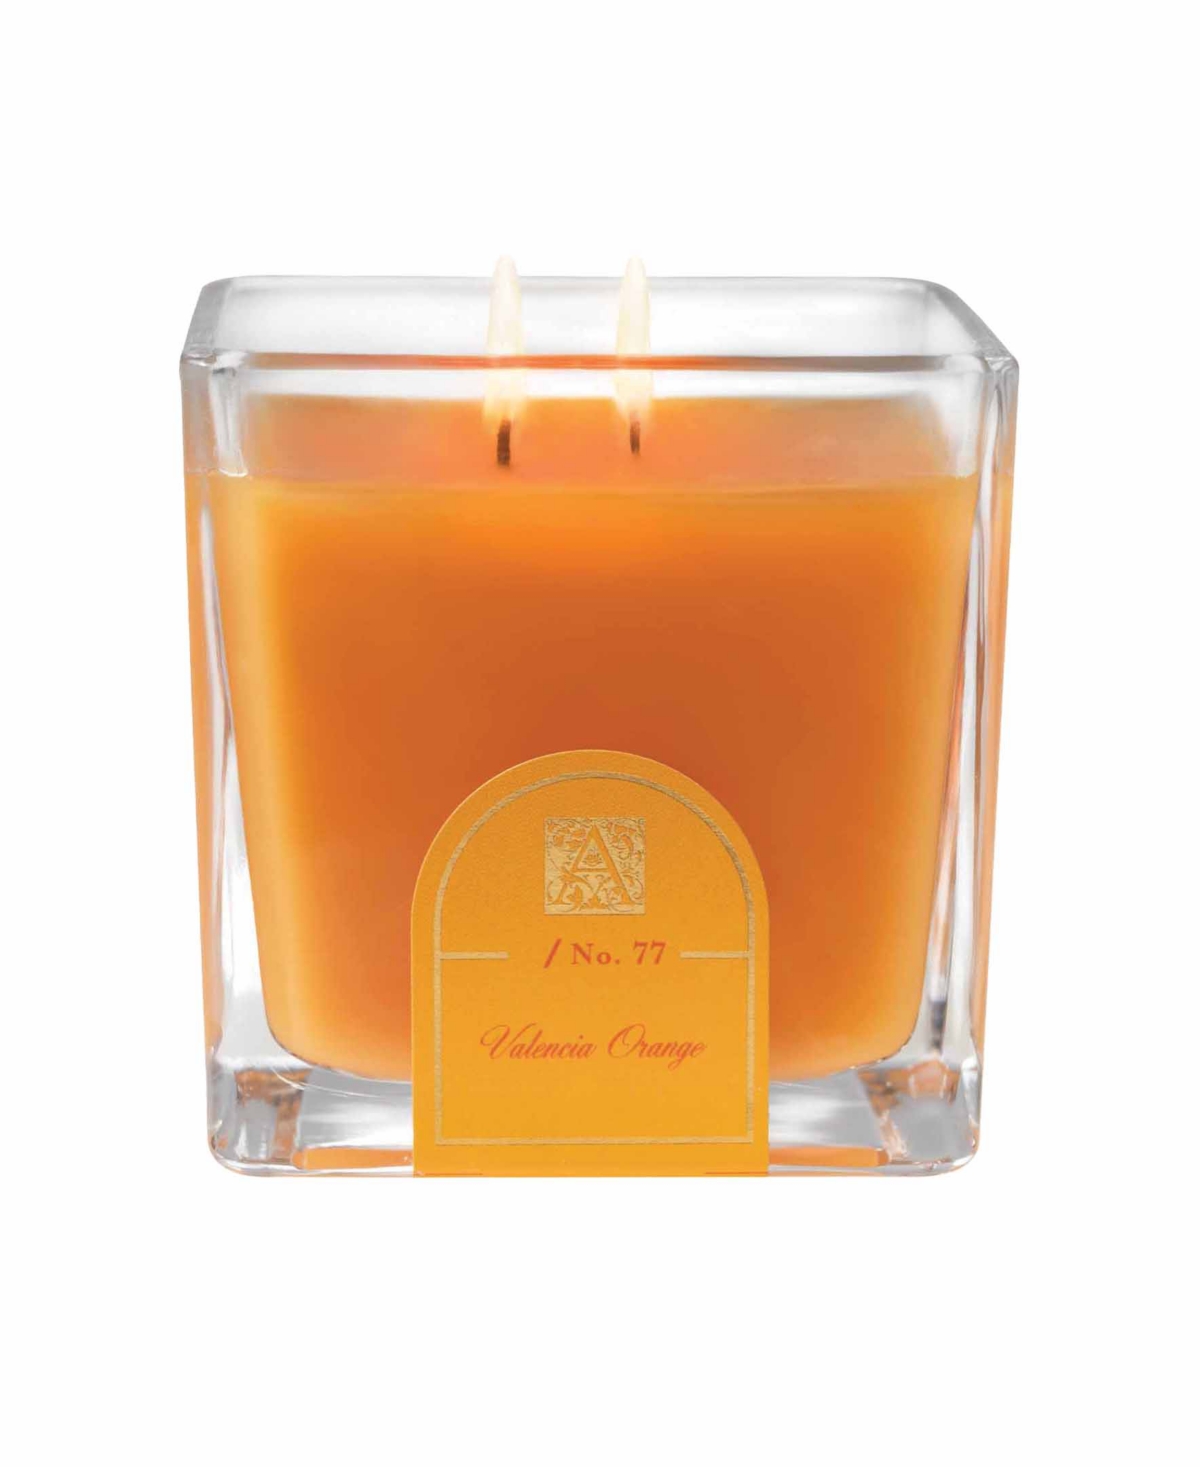 Valencia Orange Cube Candle - Orange